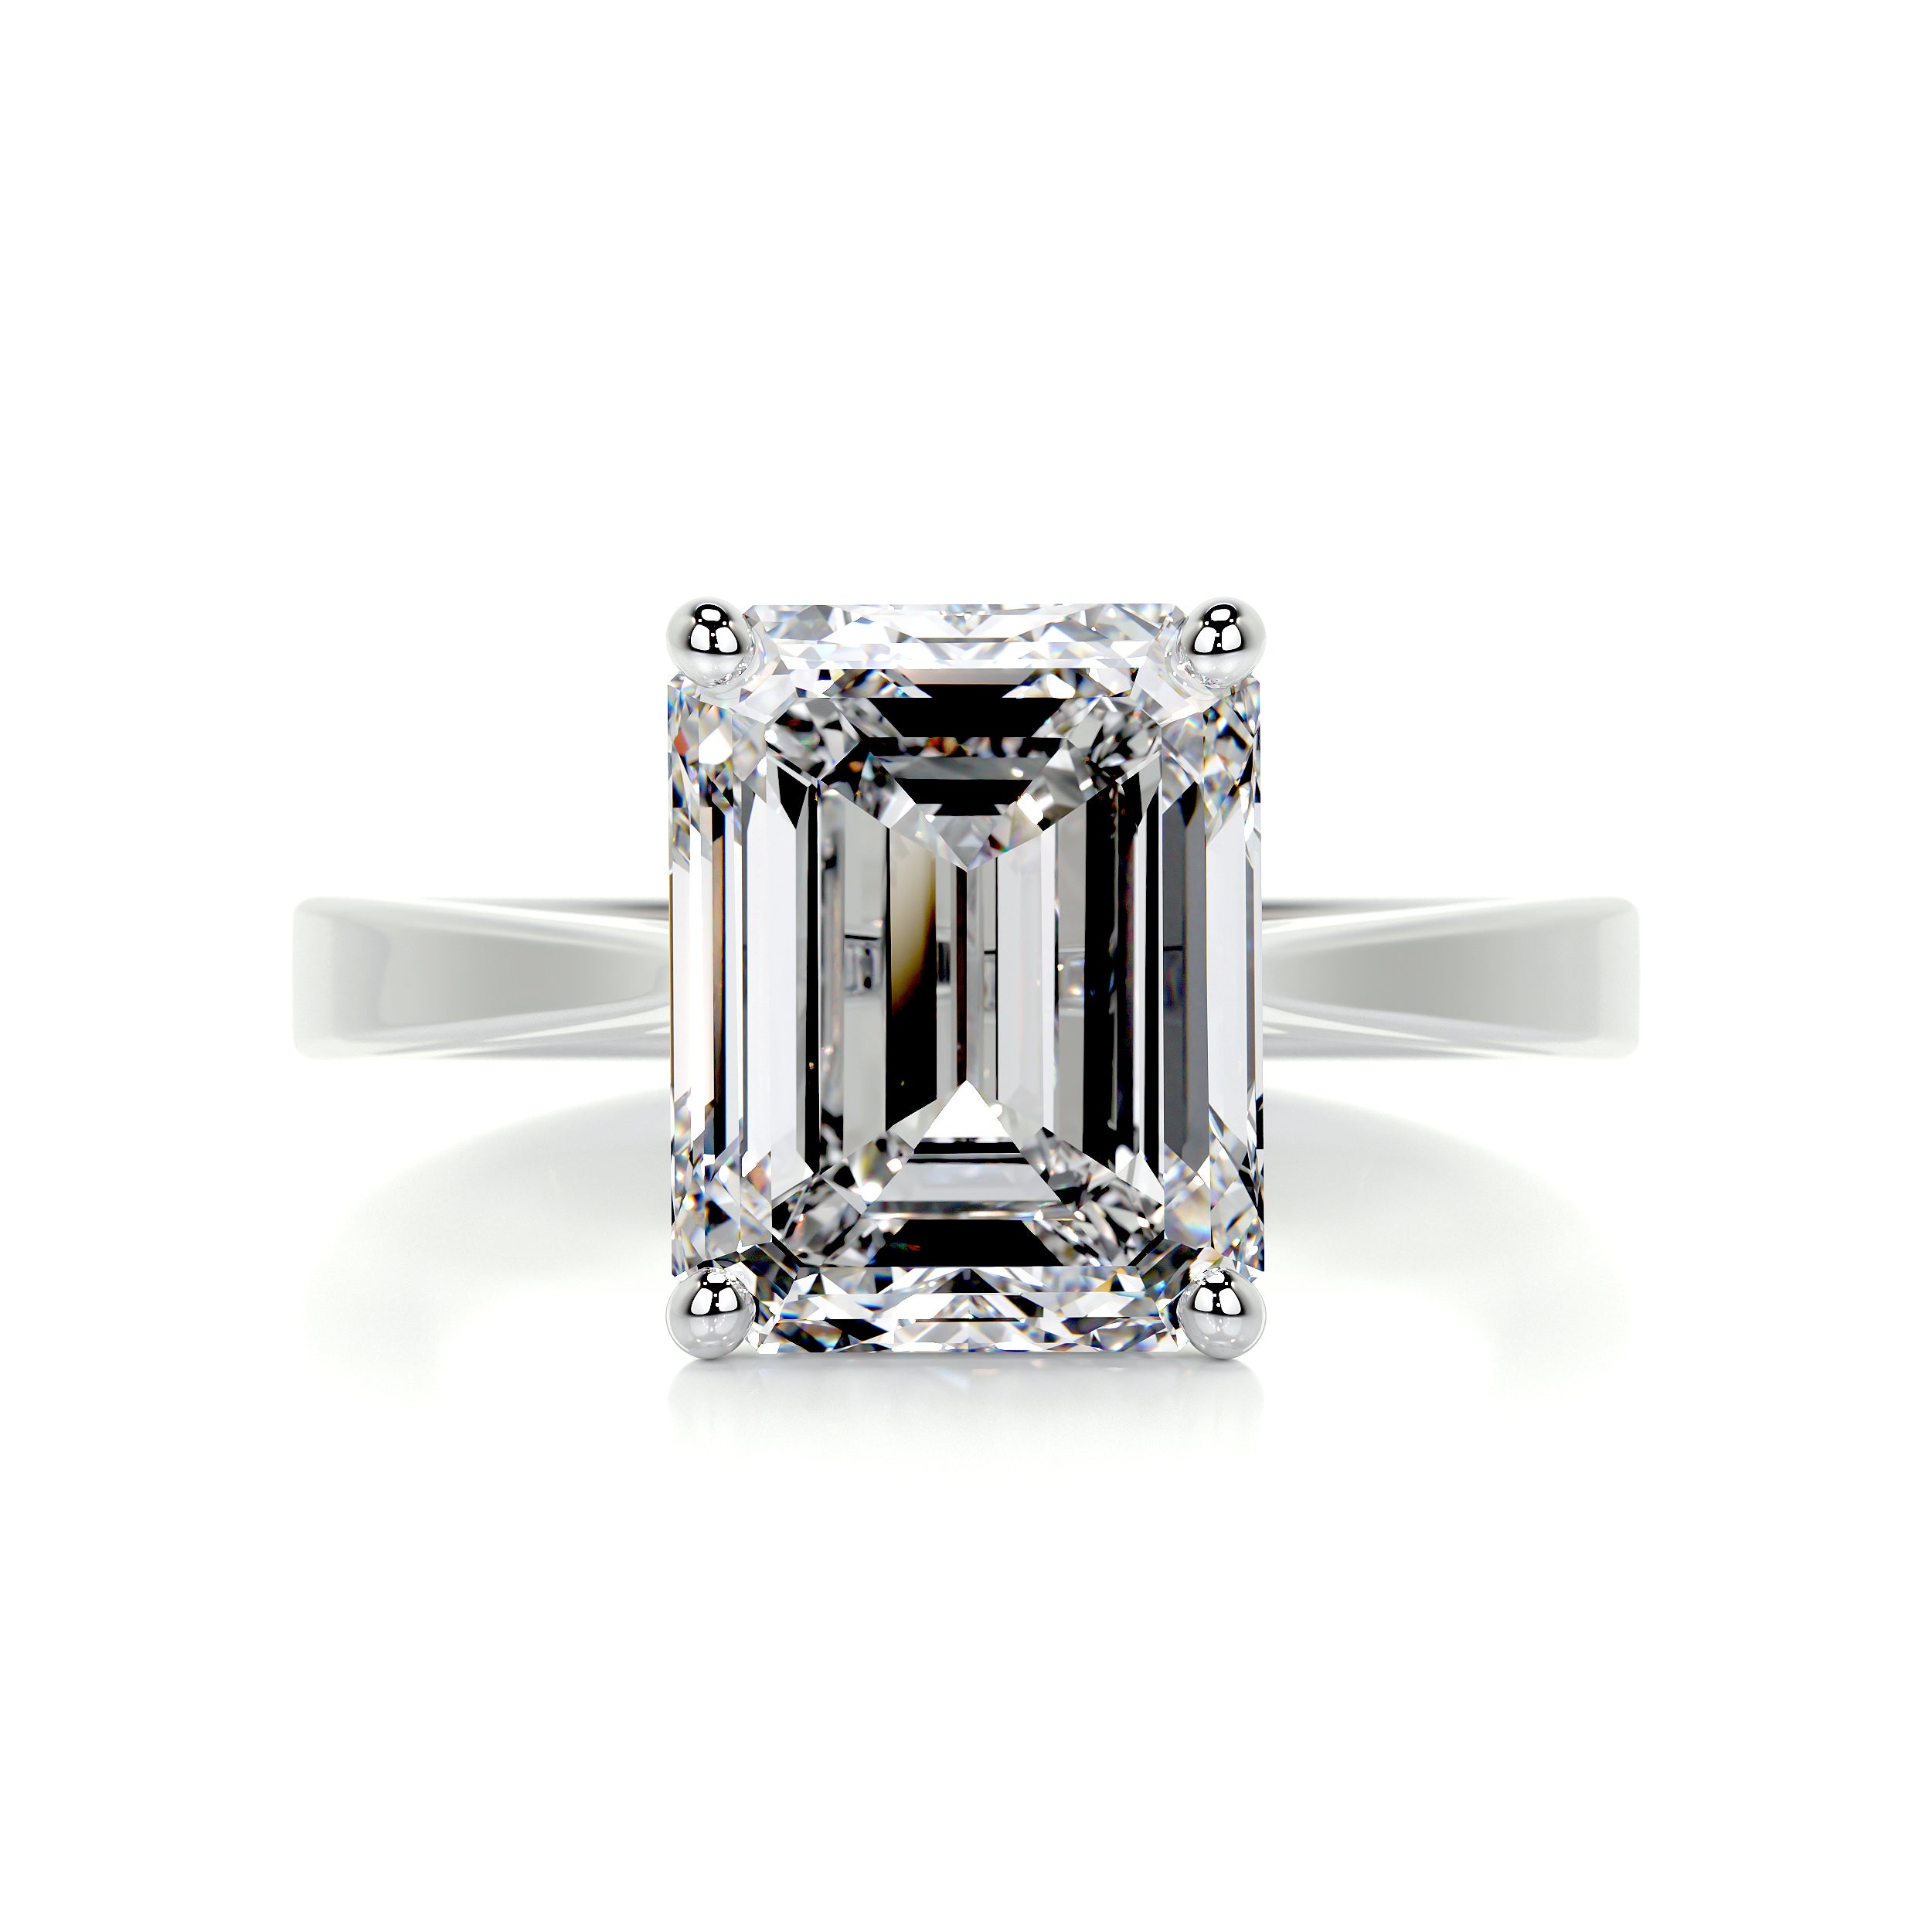 Mariana Diamond Engagement Ring   (4 Carat) -18K White Gold